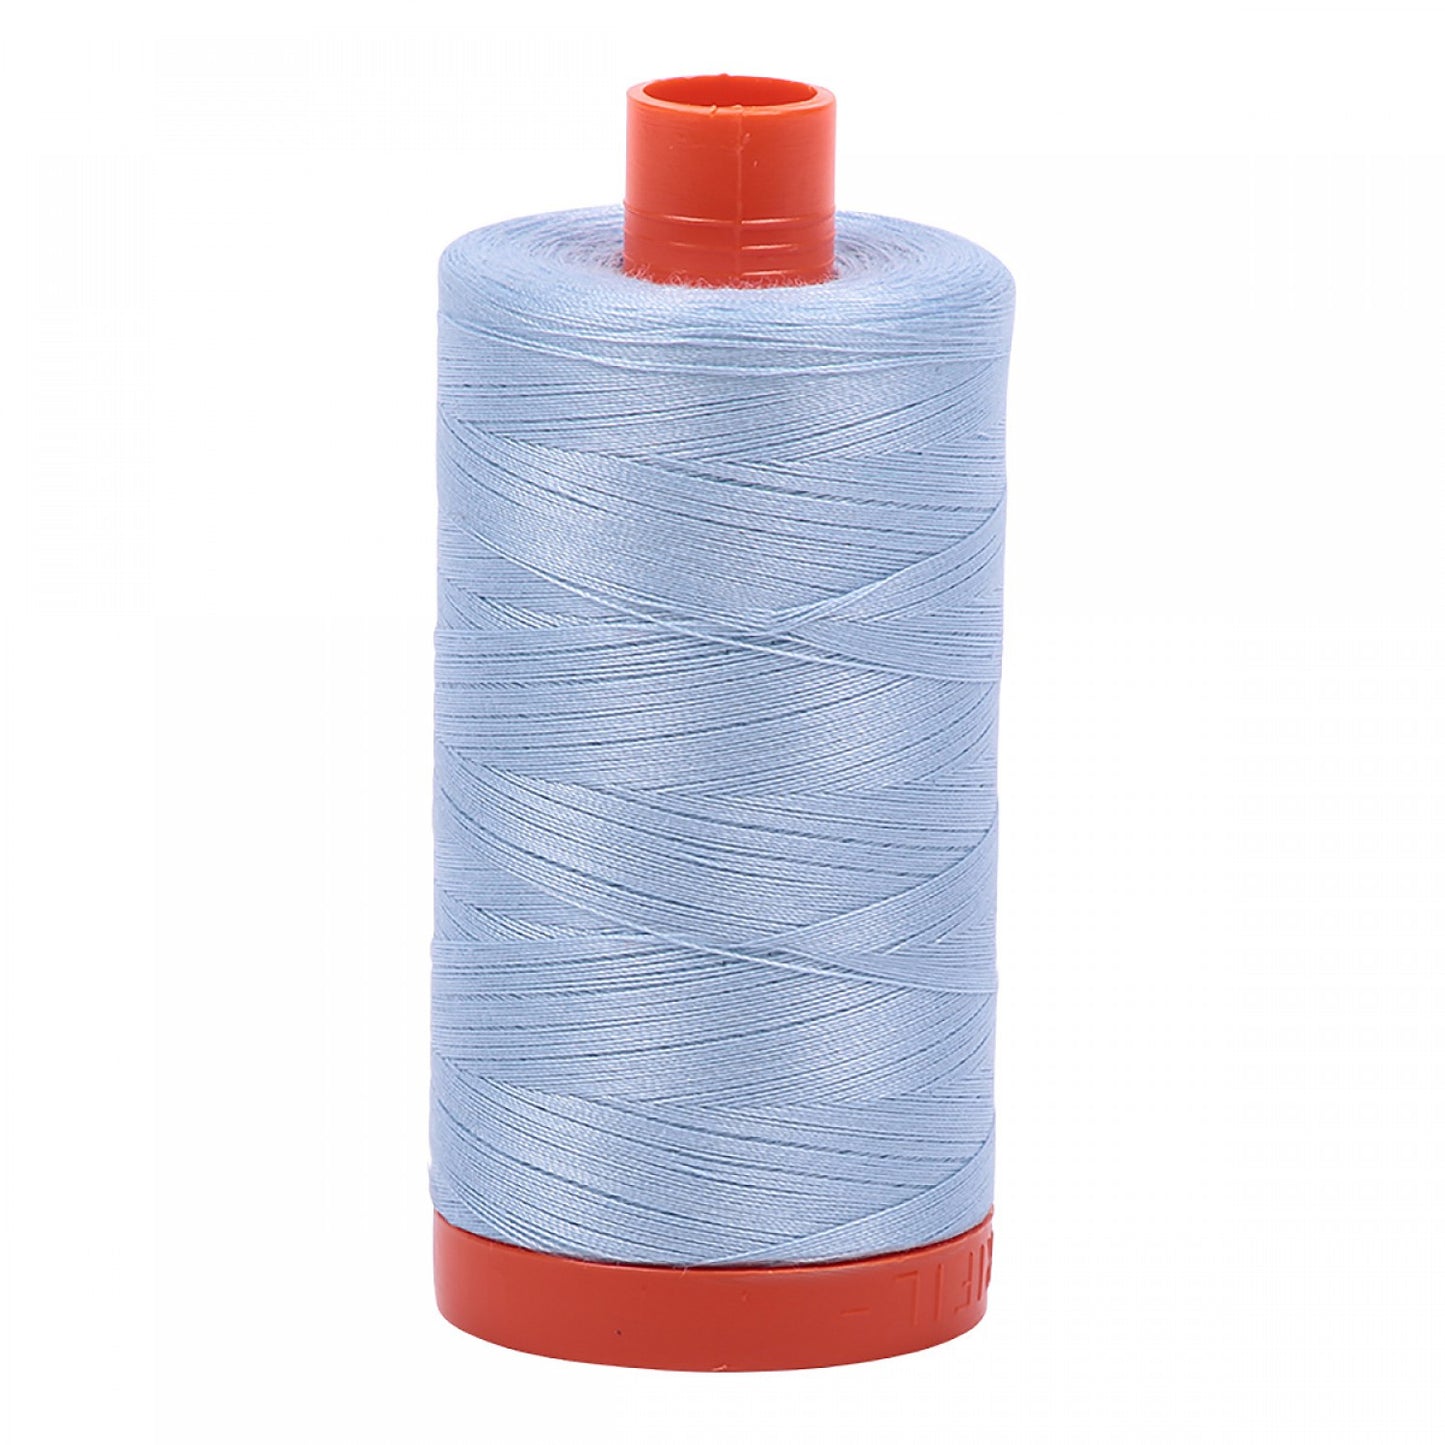 Mako Cotton Thread Solid 50wt 1422yds